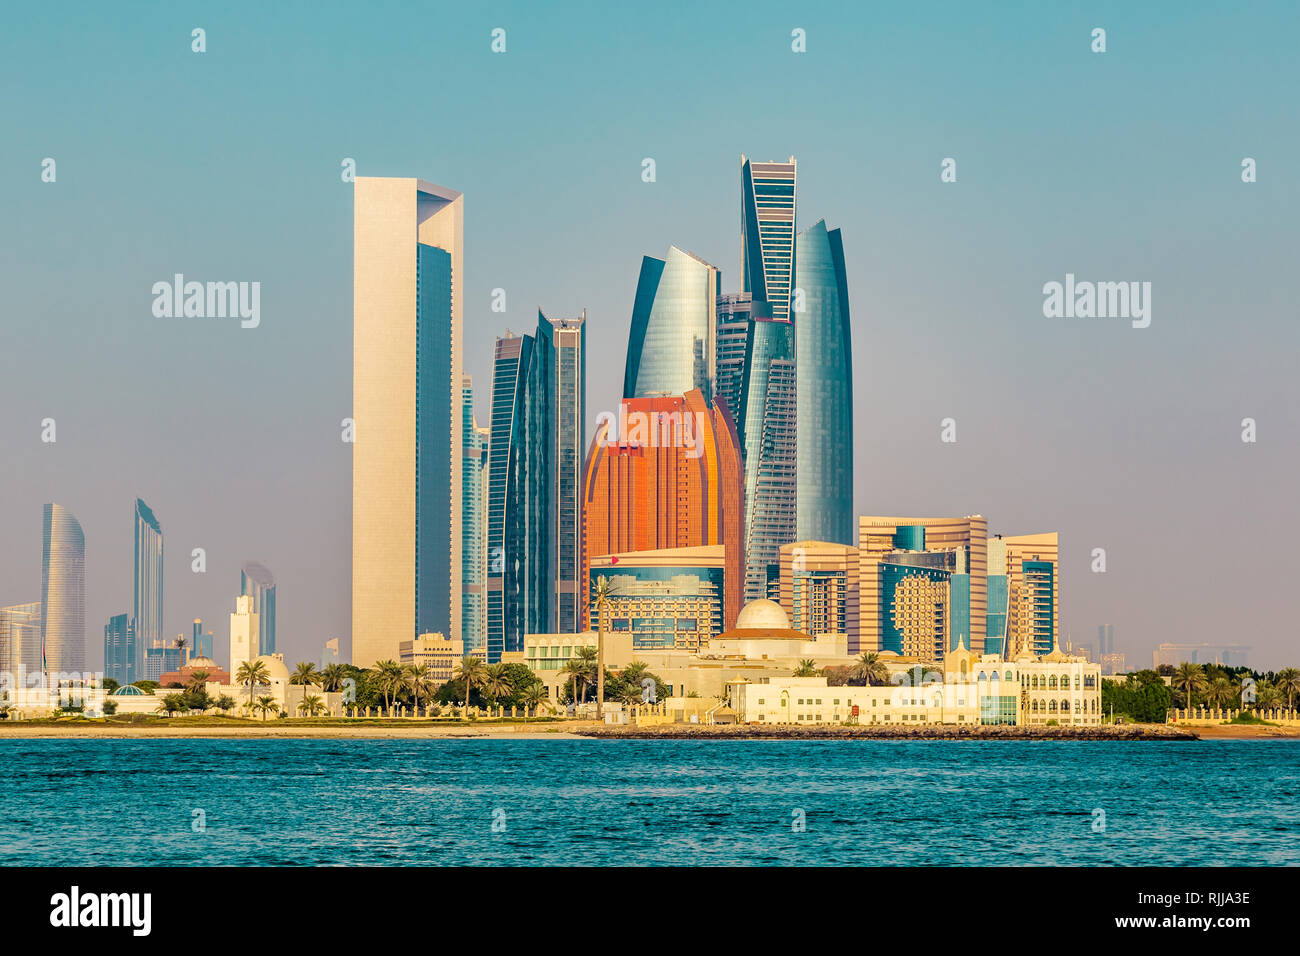 Abu dhabi, United Arab Emirates, December 1. 2017: Etihad Towers loom over the surrounding landscape. Stock Photo